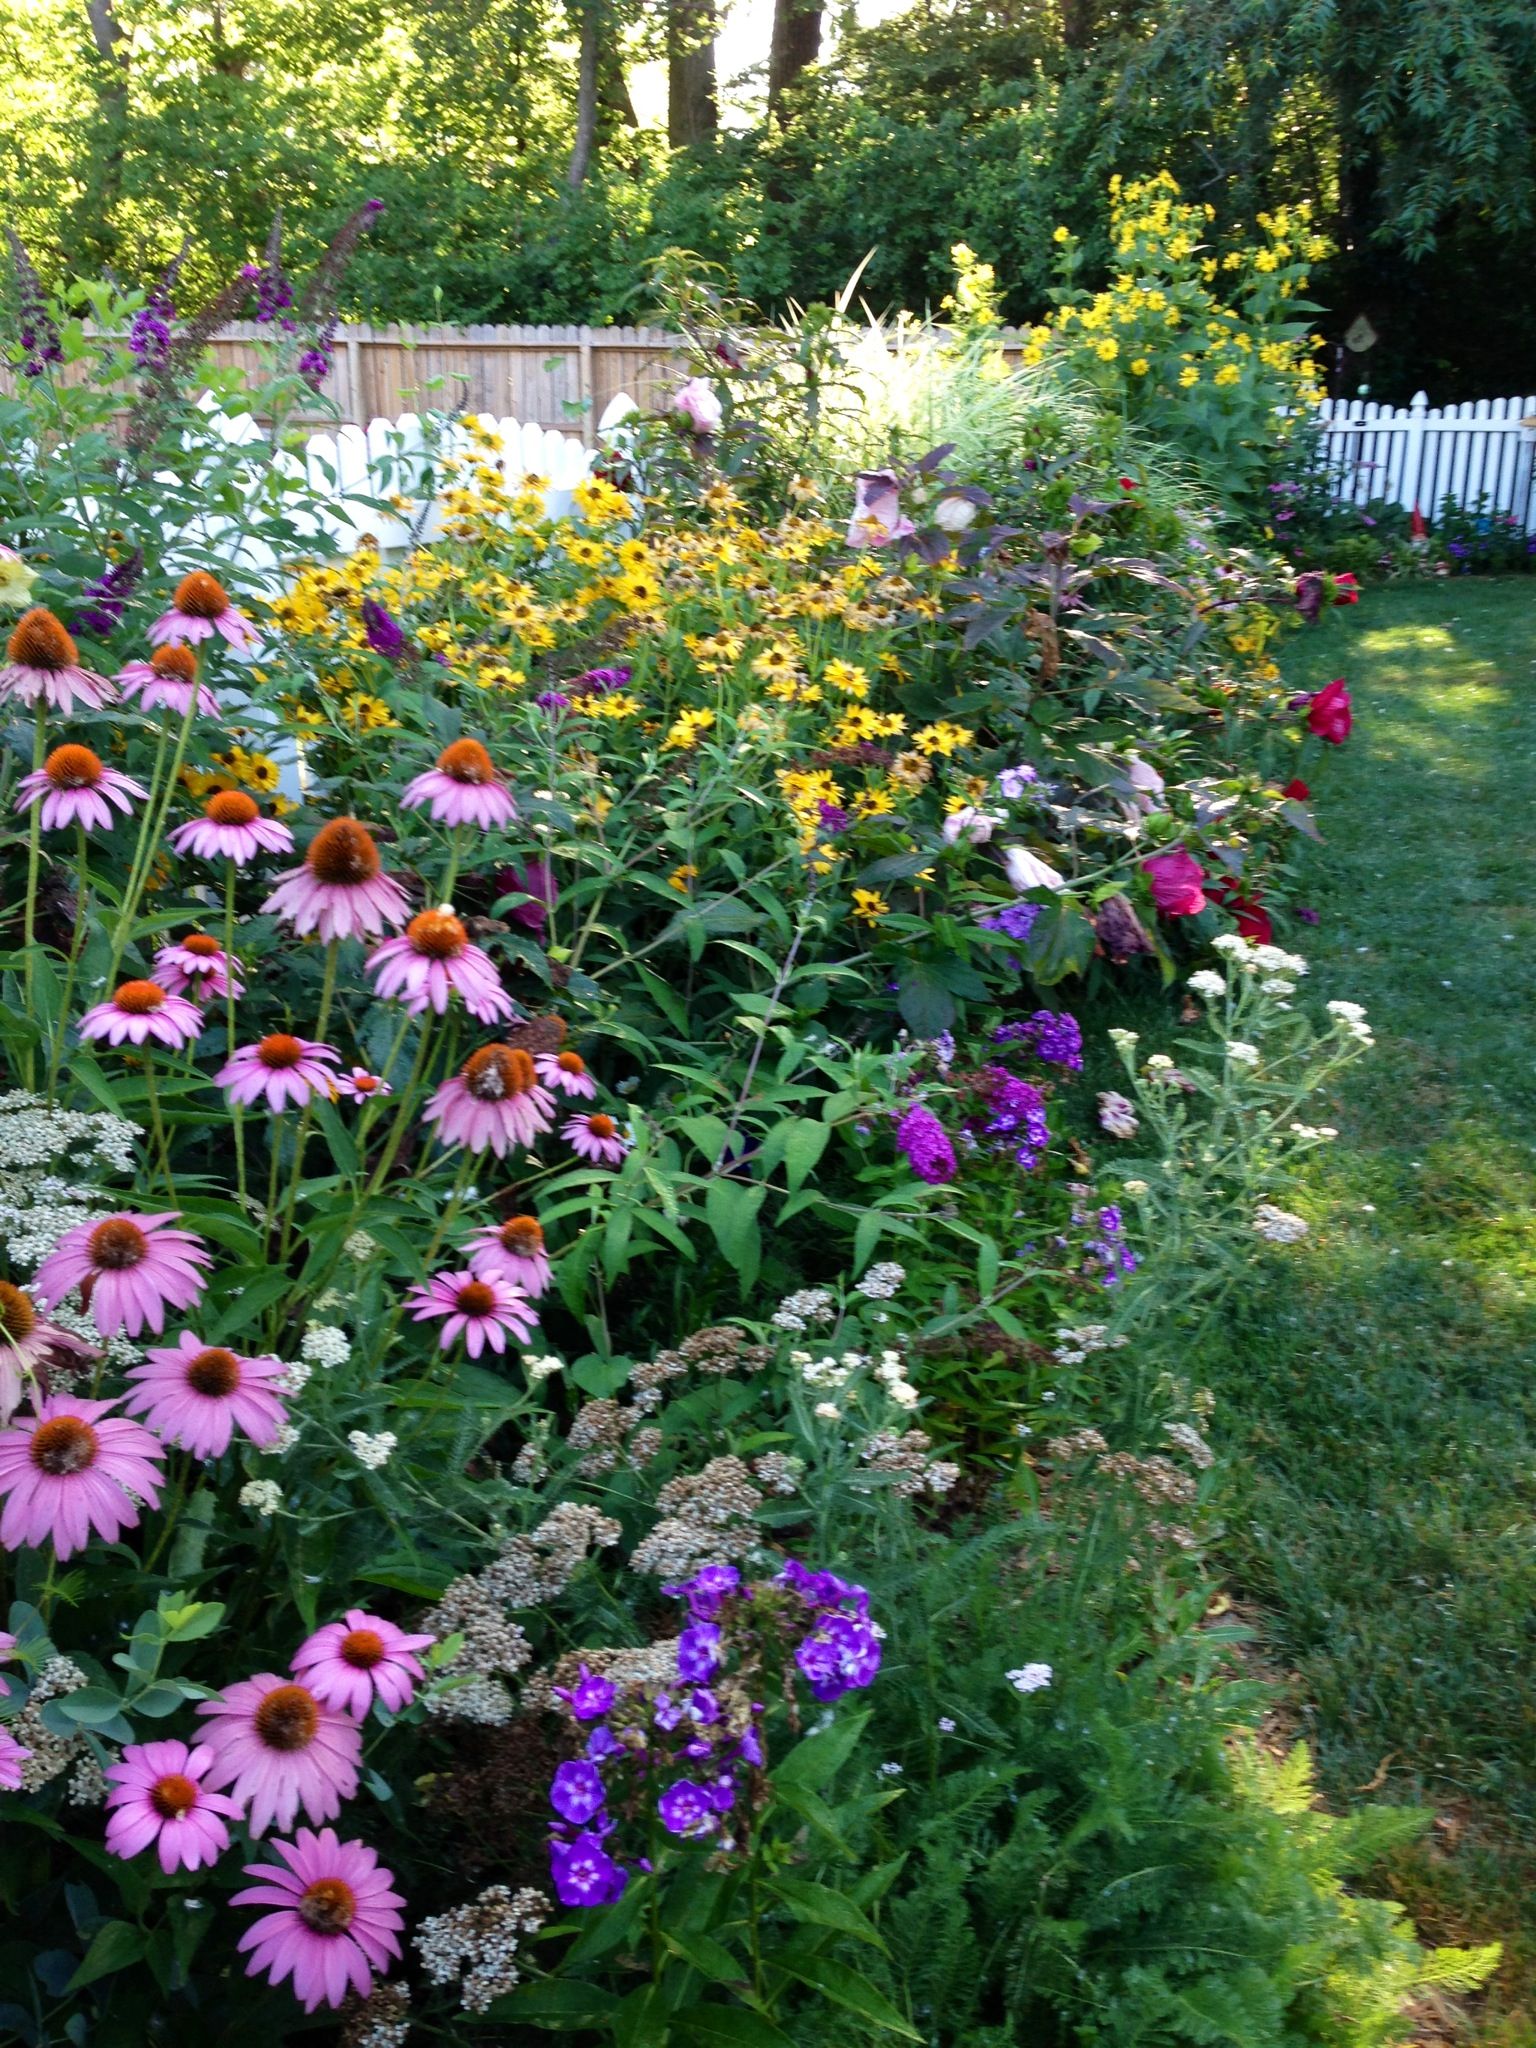 Peaceful Summer Garden Pictures